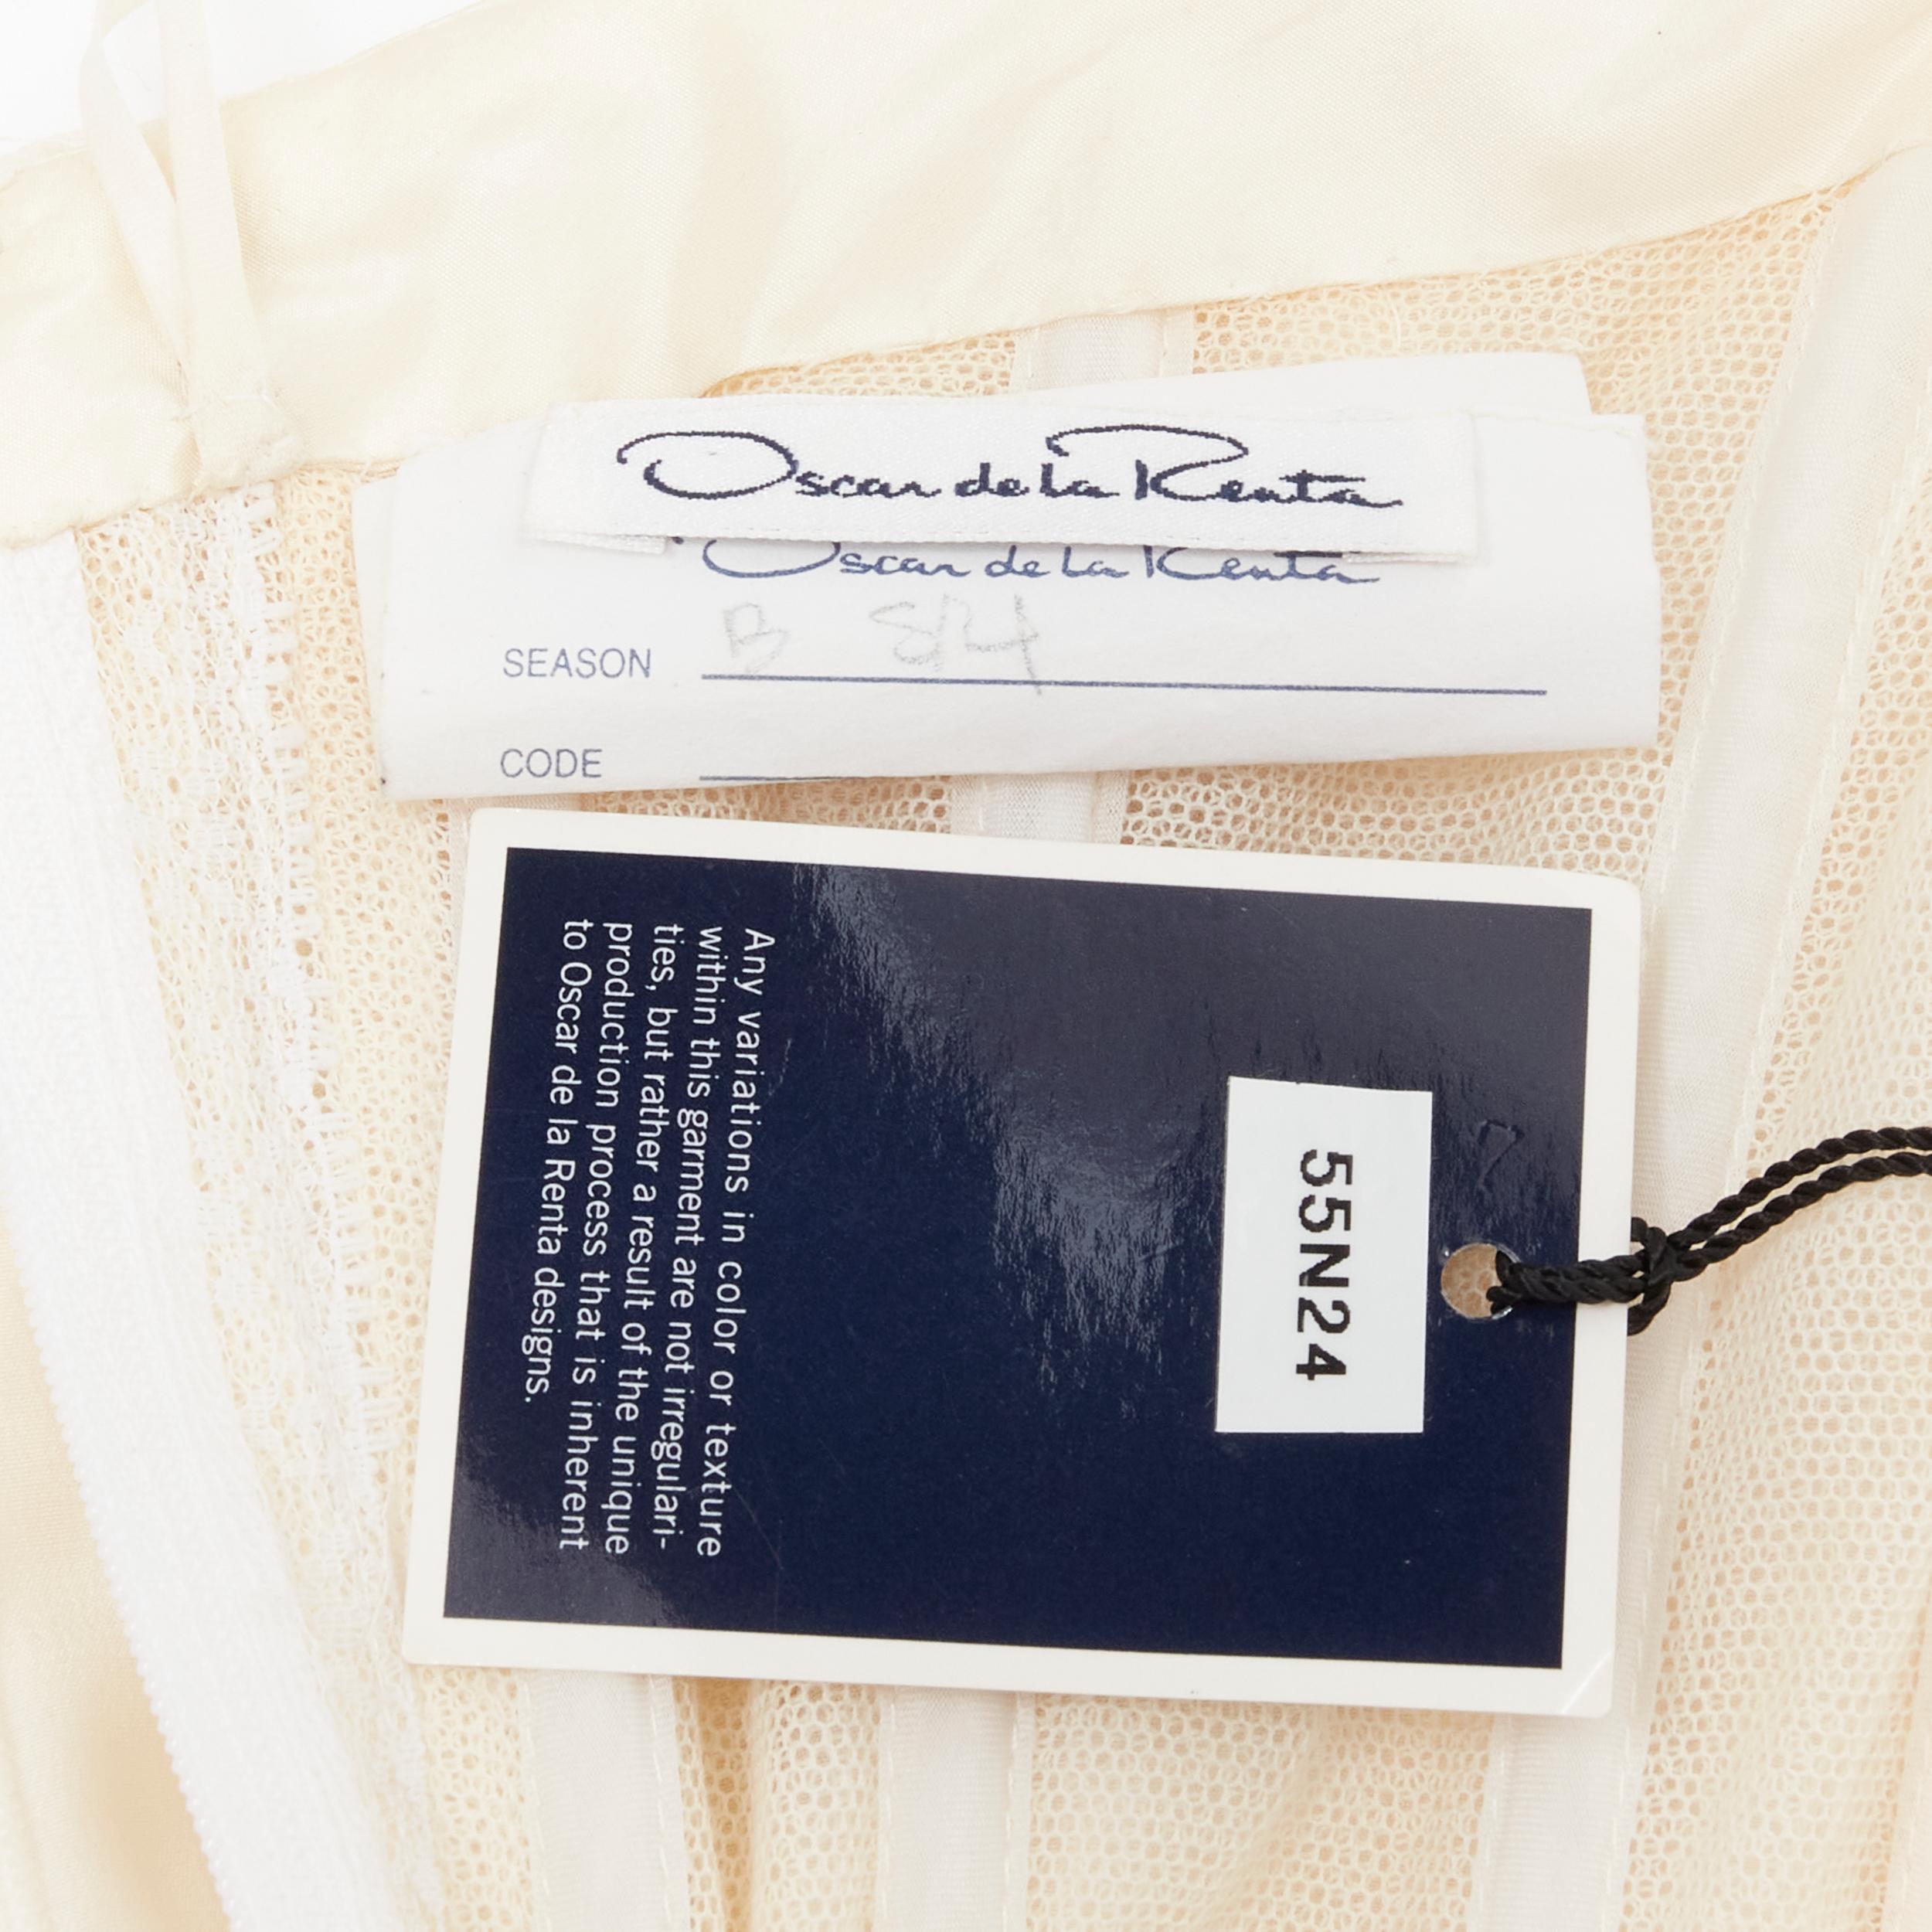 OSCAR DE LA RENTA ivory white boned corset strapless evening gown dress US0 XS 6